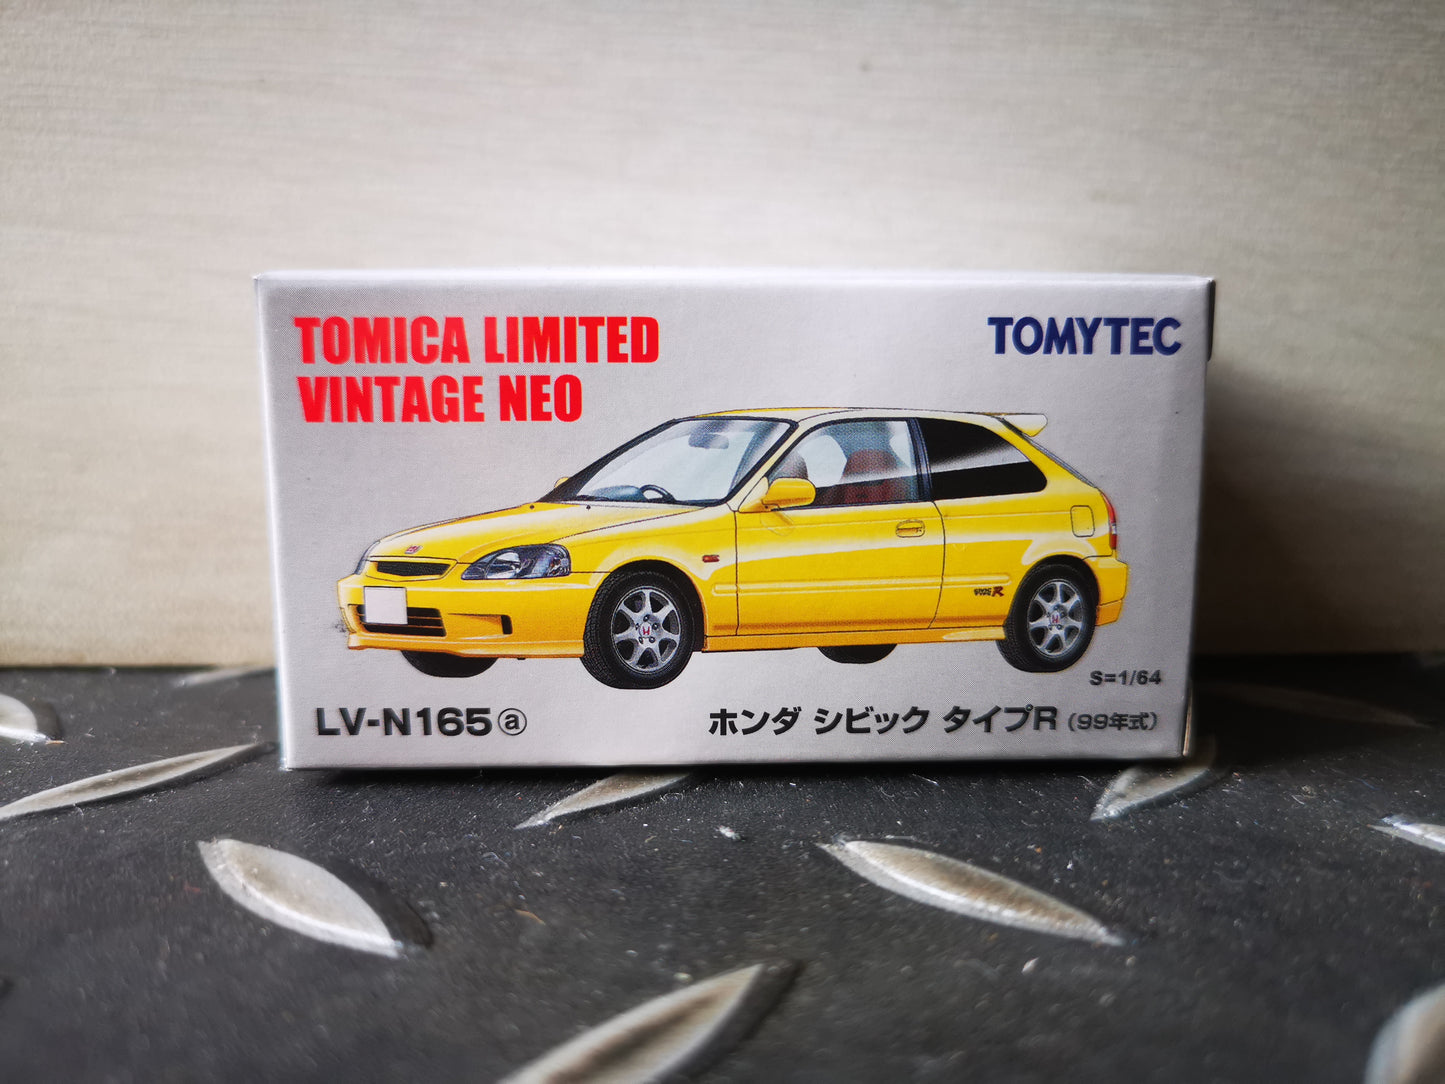 Tomica Limited Vintage Neo LV-N165a Honda Civic EK9 TypeR Yellow 99